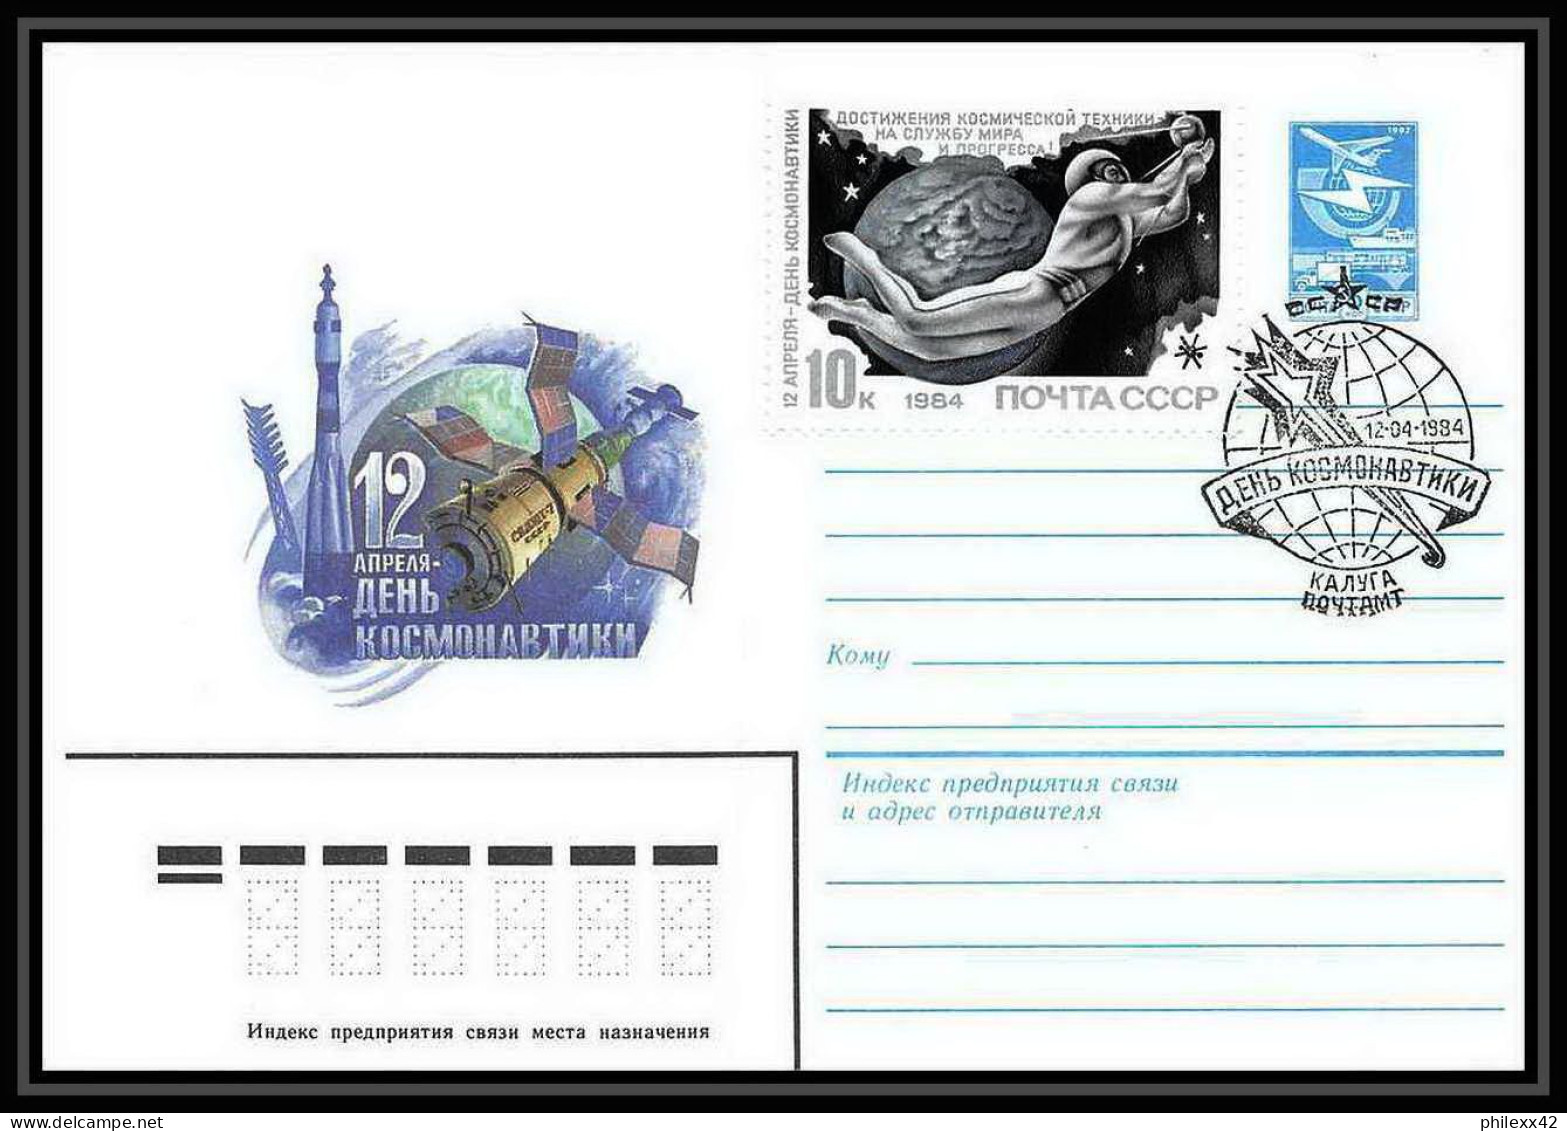 9135/ Espace (space Raumfahrt) Entier Postal (Stamped Stationery) 12/4/1984 Gagarine Gagarin (Russia Urss USSR) - UdSSR